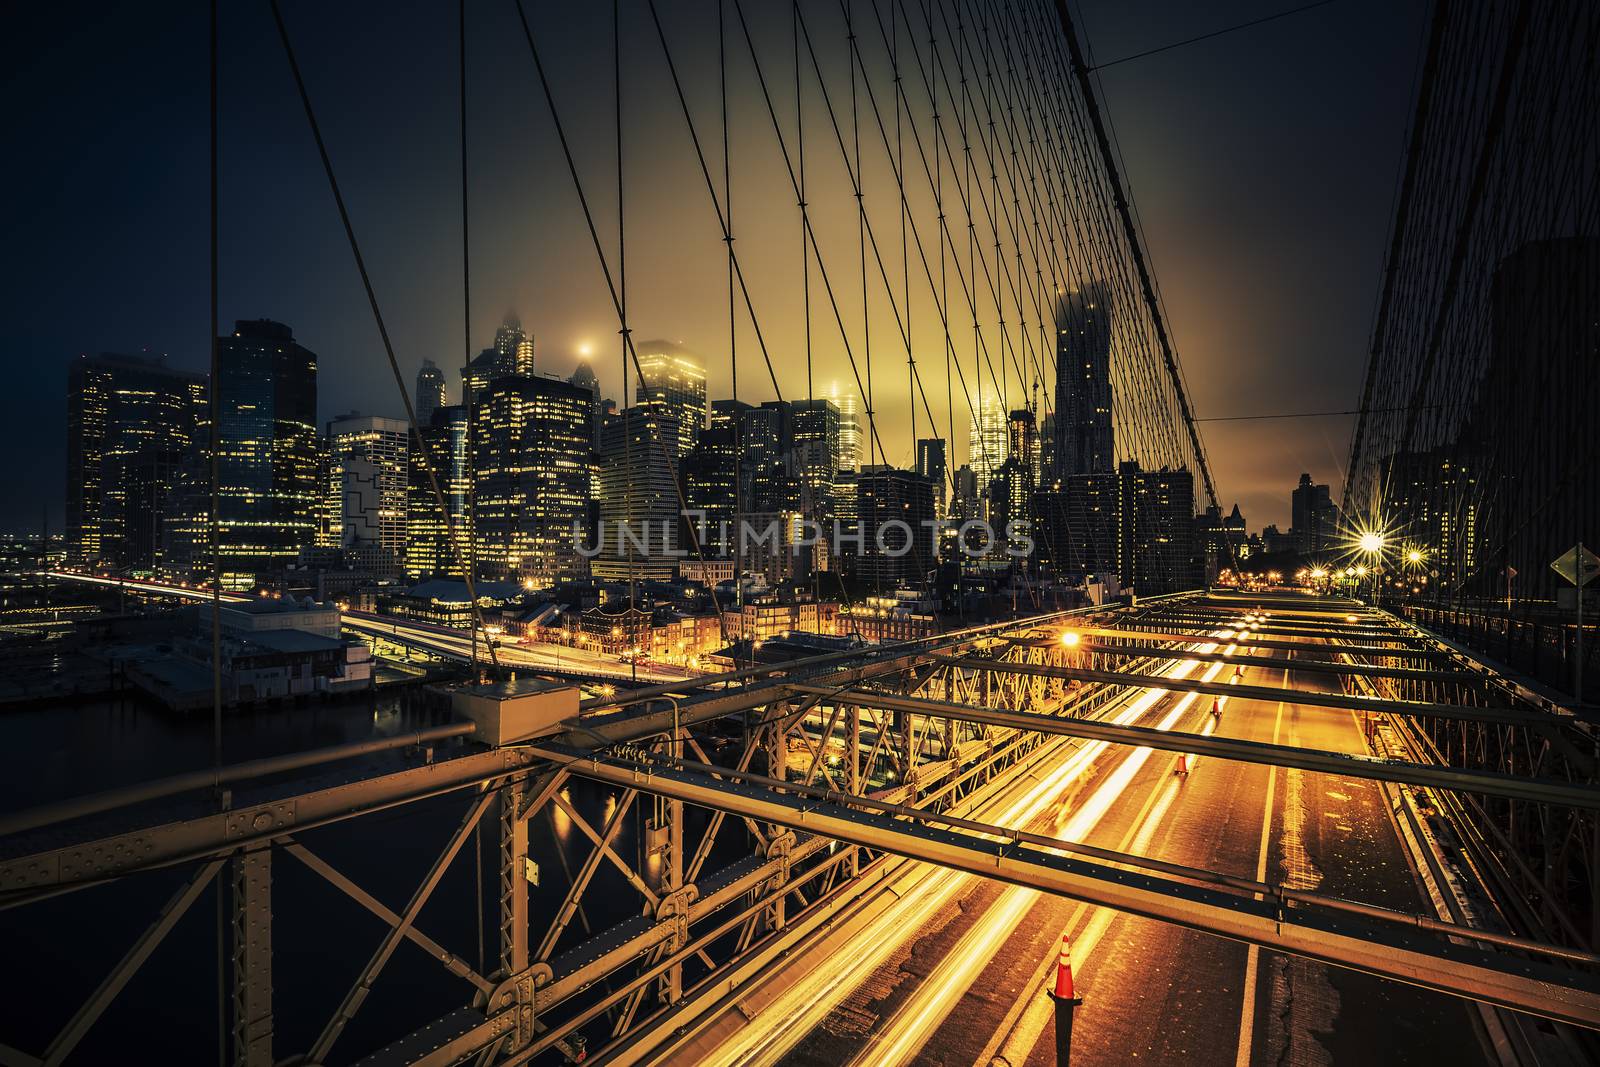 View of Brooklyn Bridge at night with car traffic